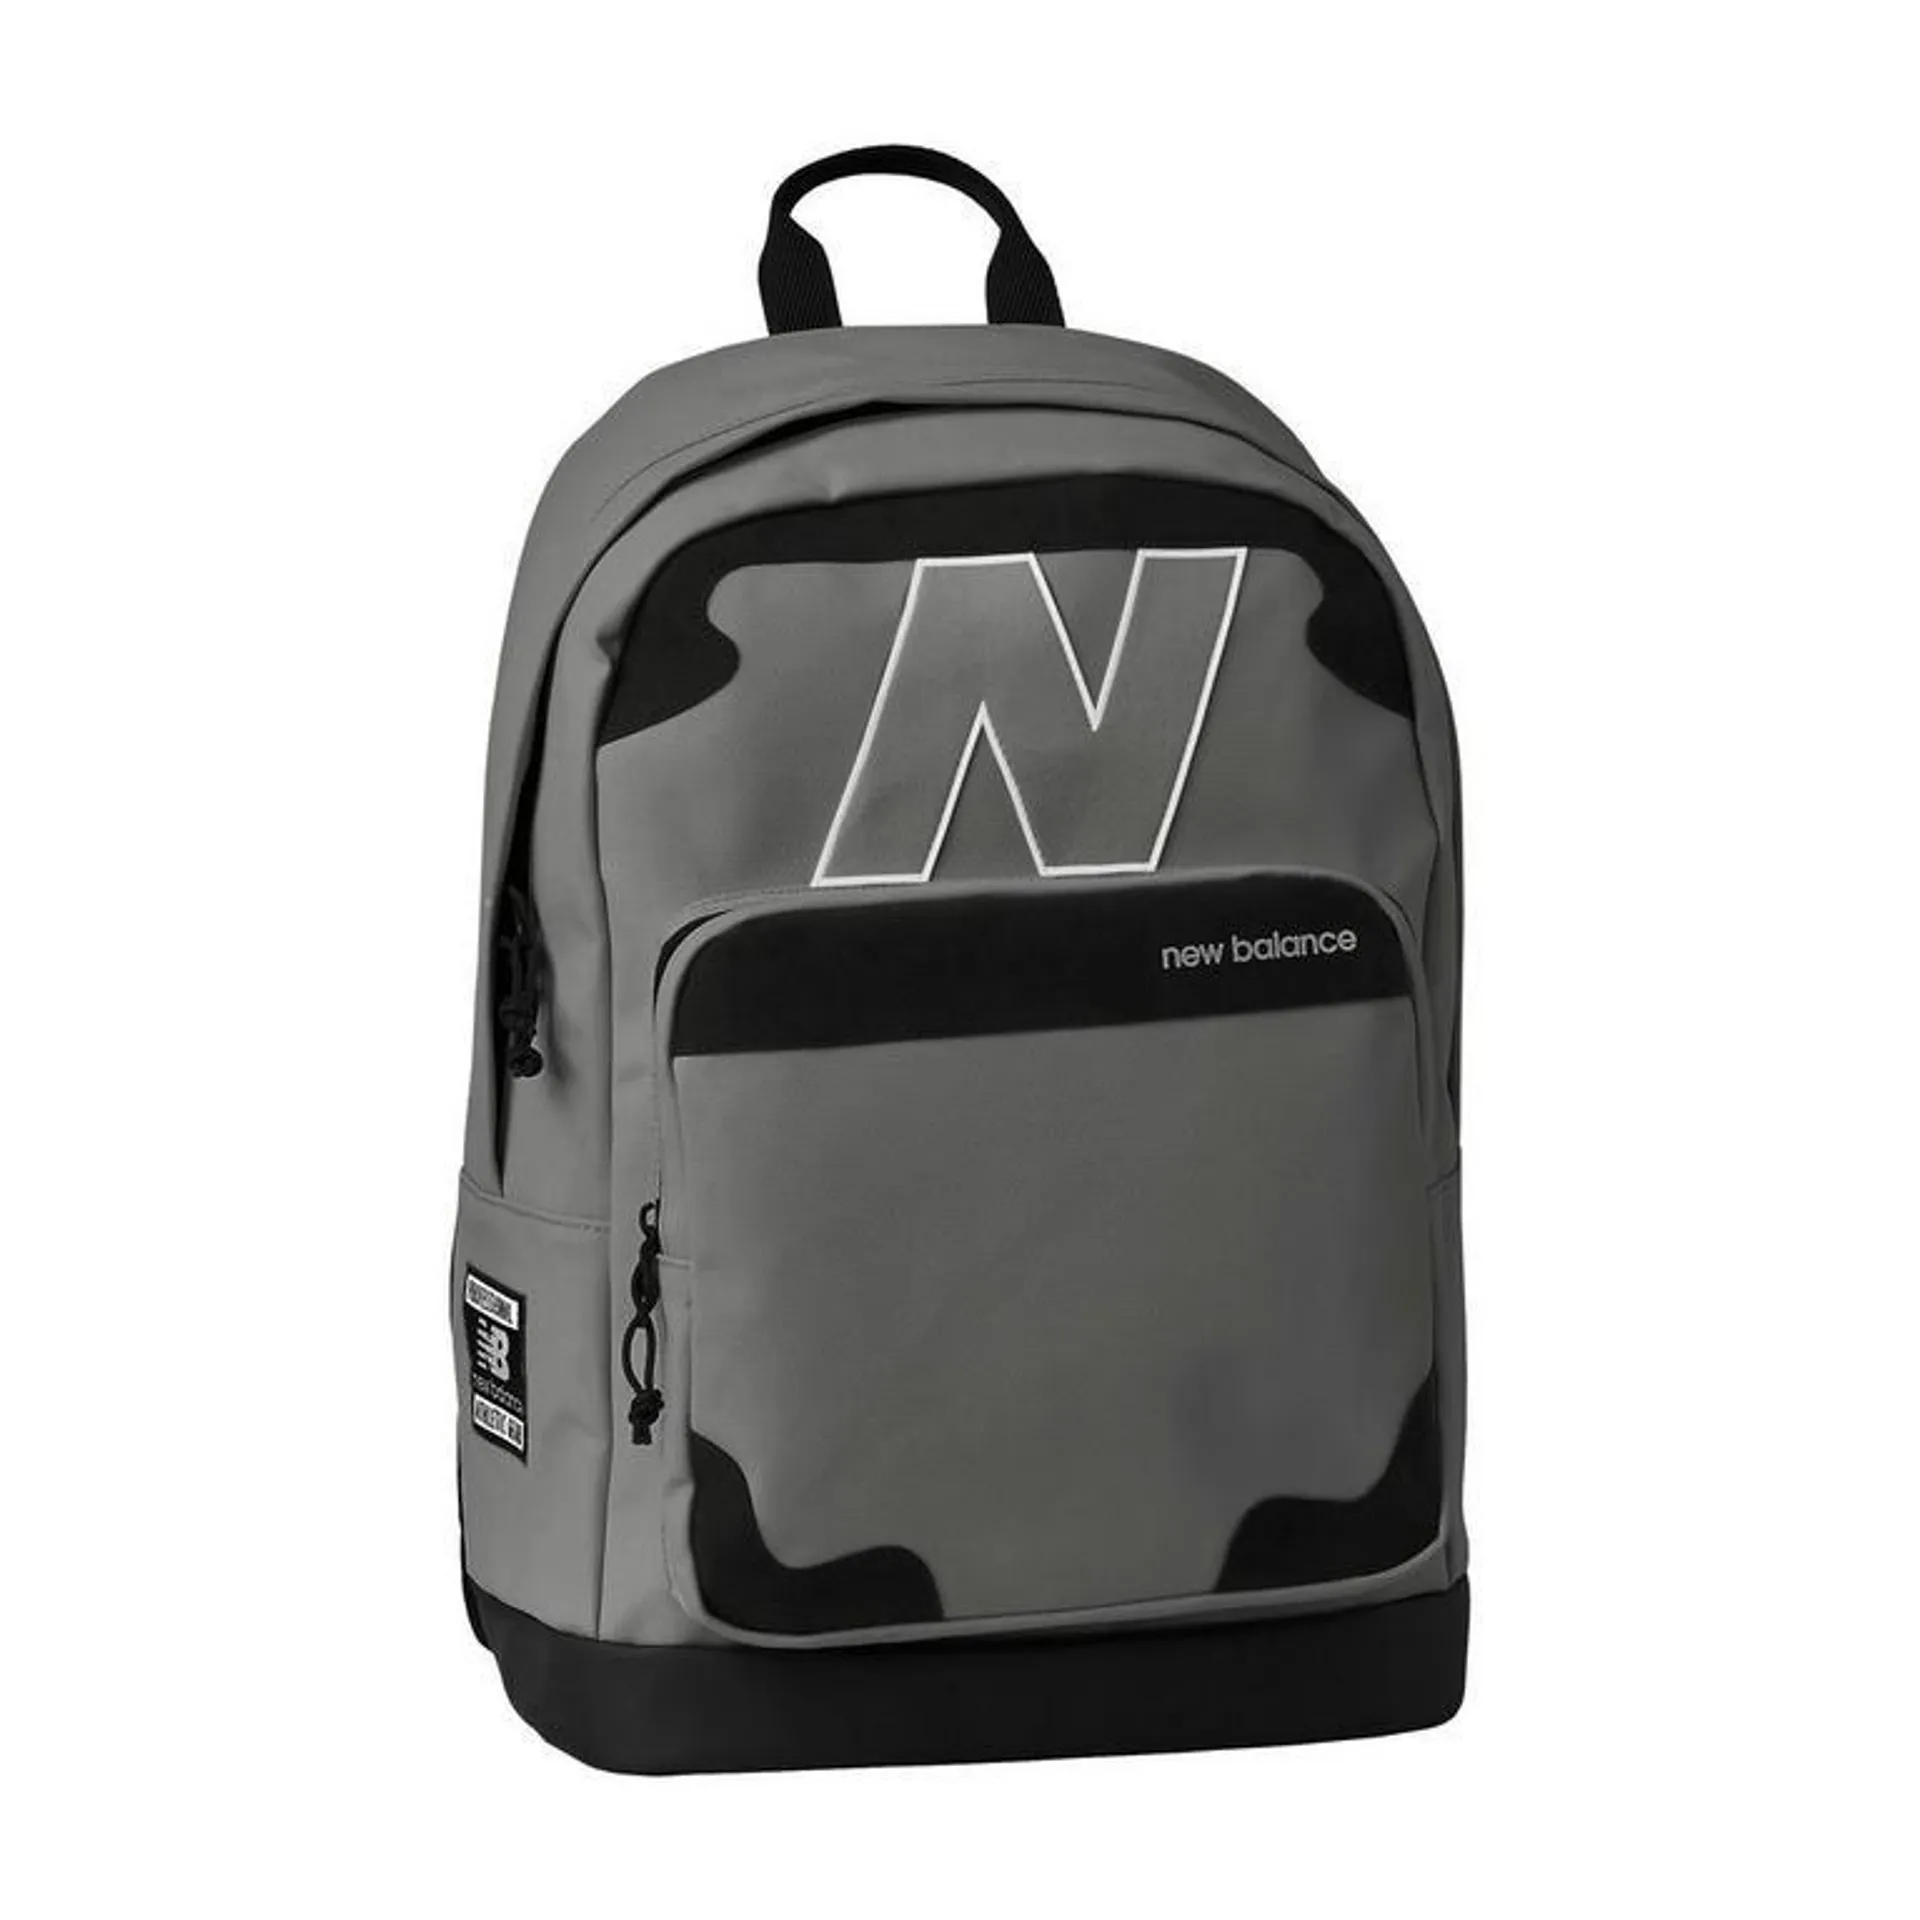 NB LAB21013 Legacy Backpack